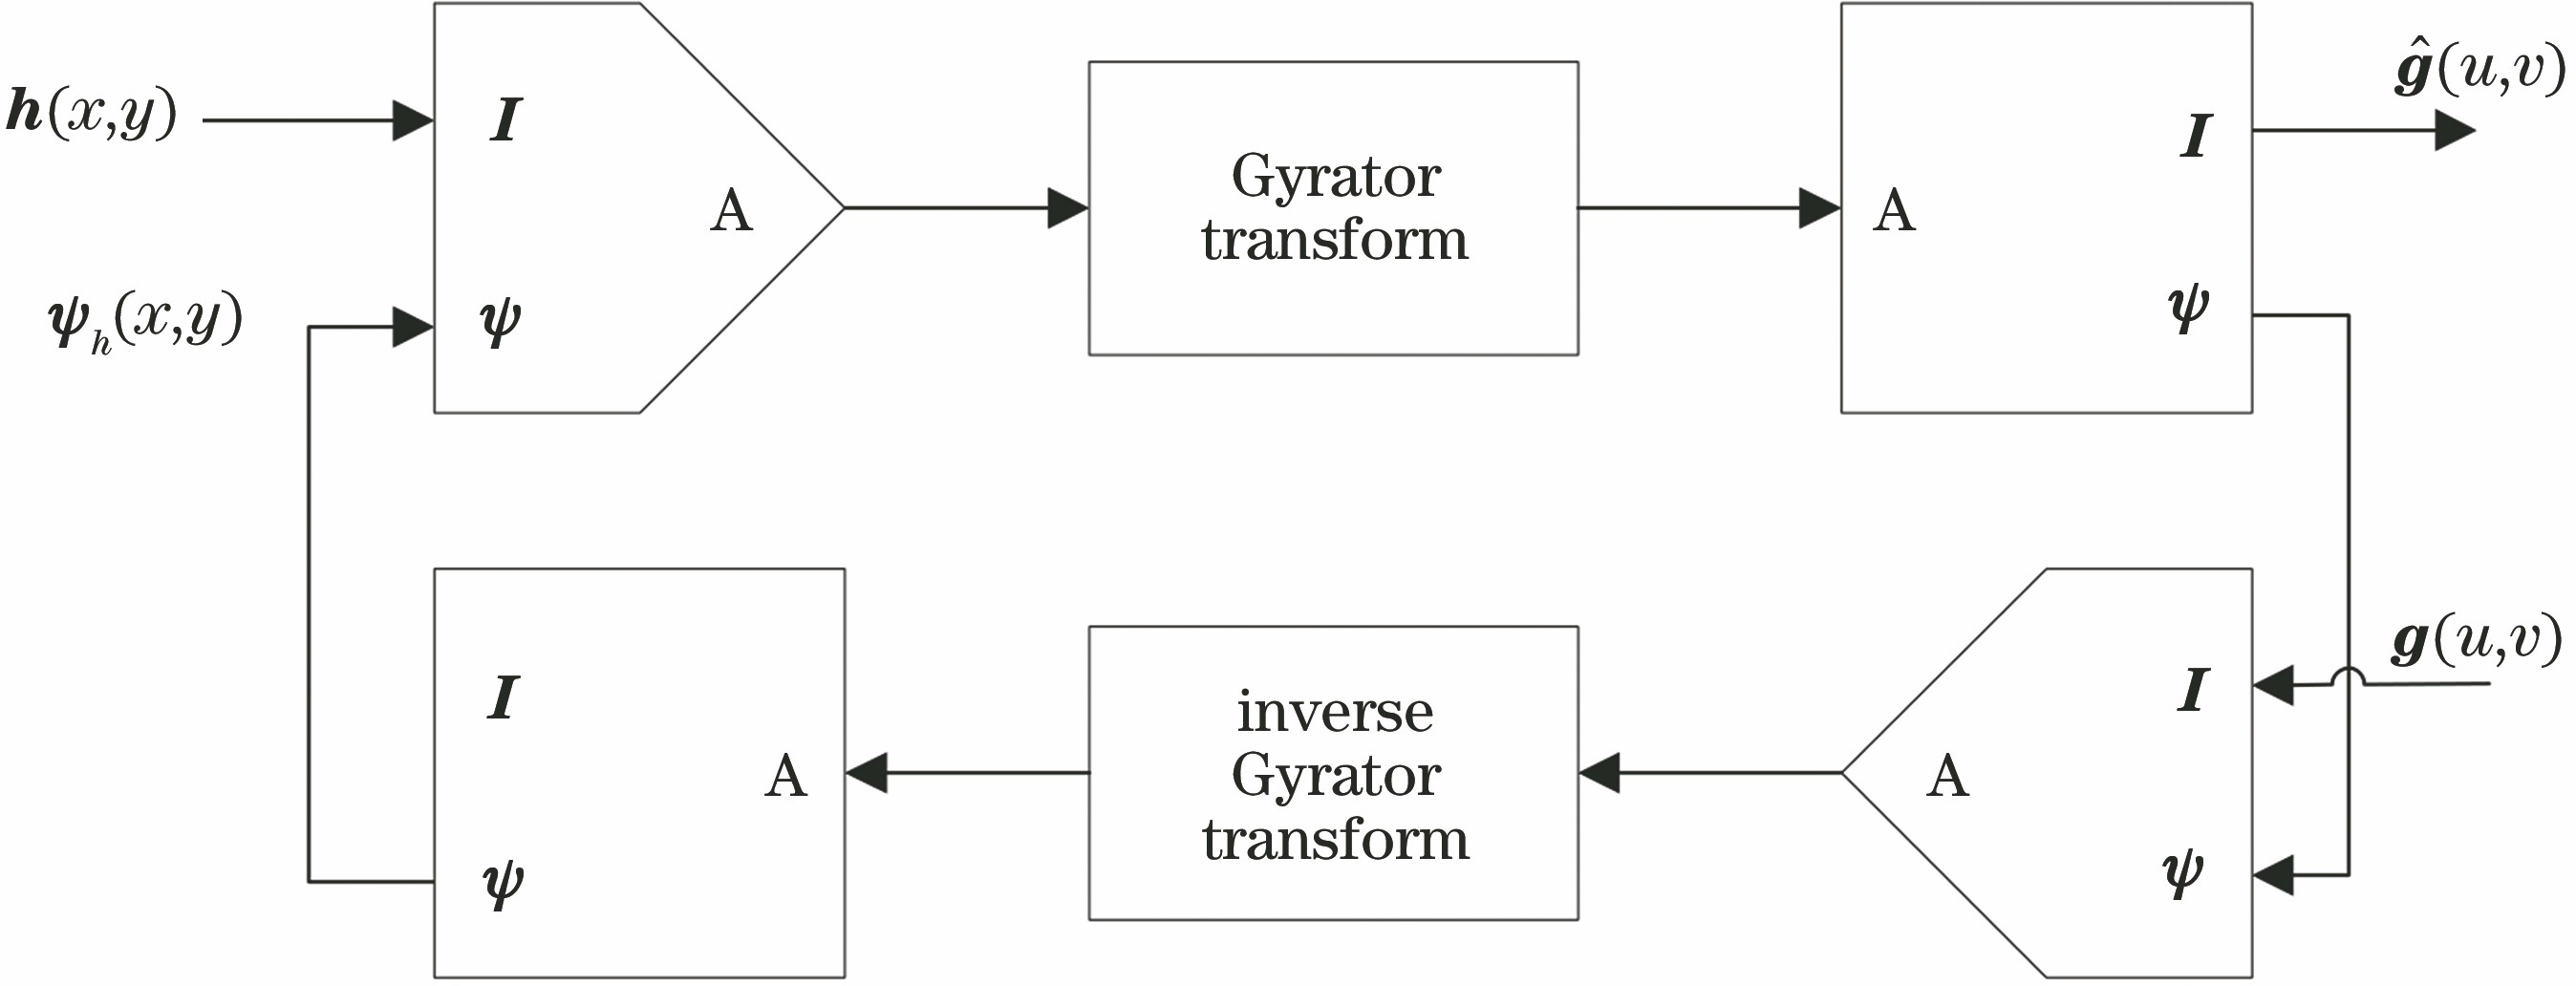 Modified Gerchberg-Saxton algorithm flowchart in Gyrator transform domain